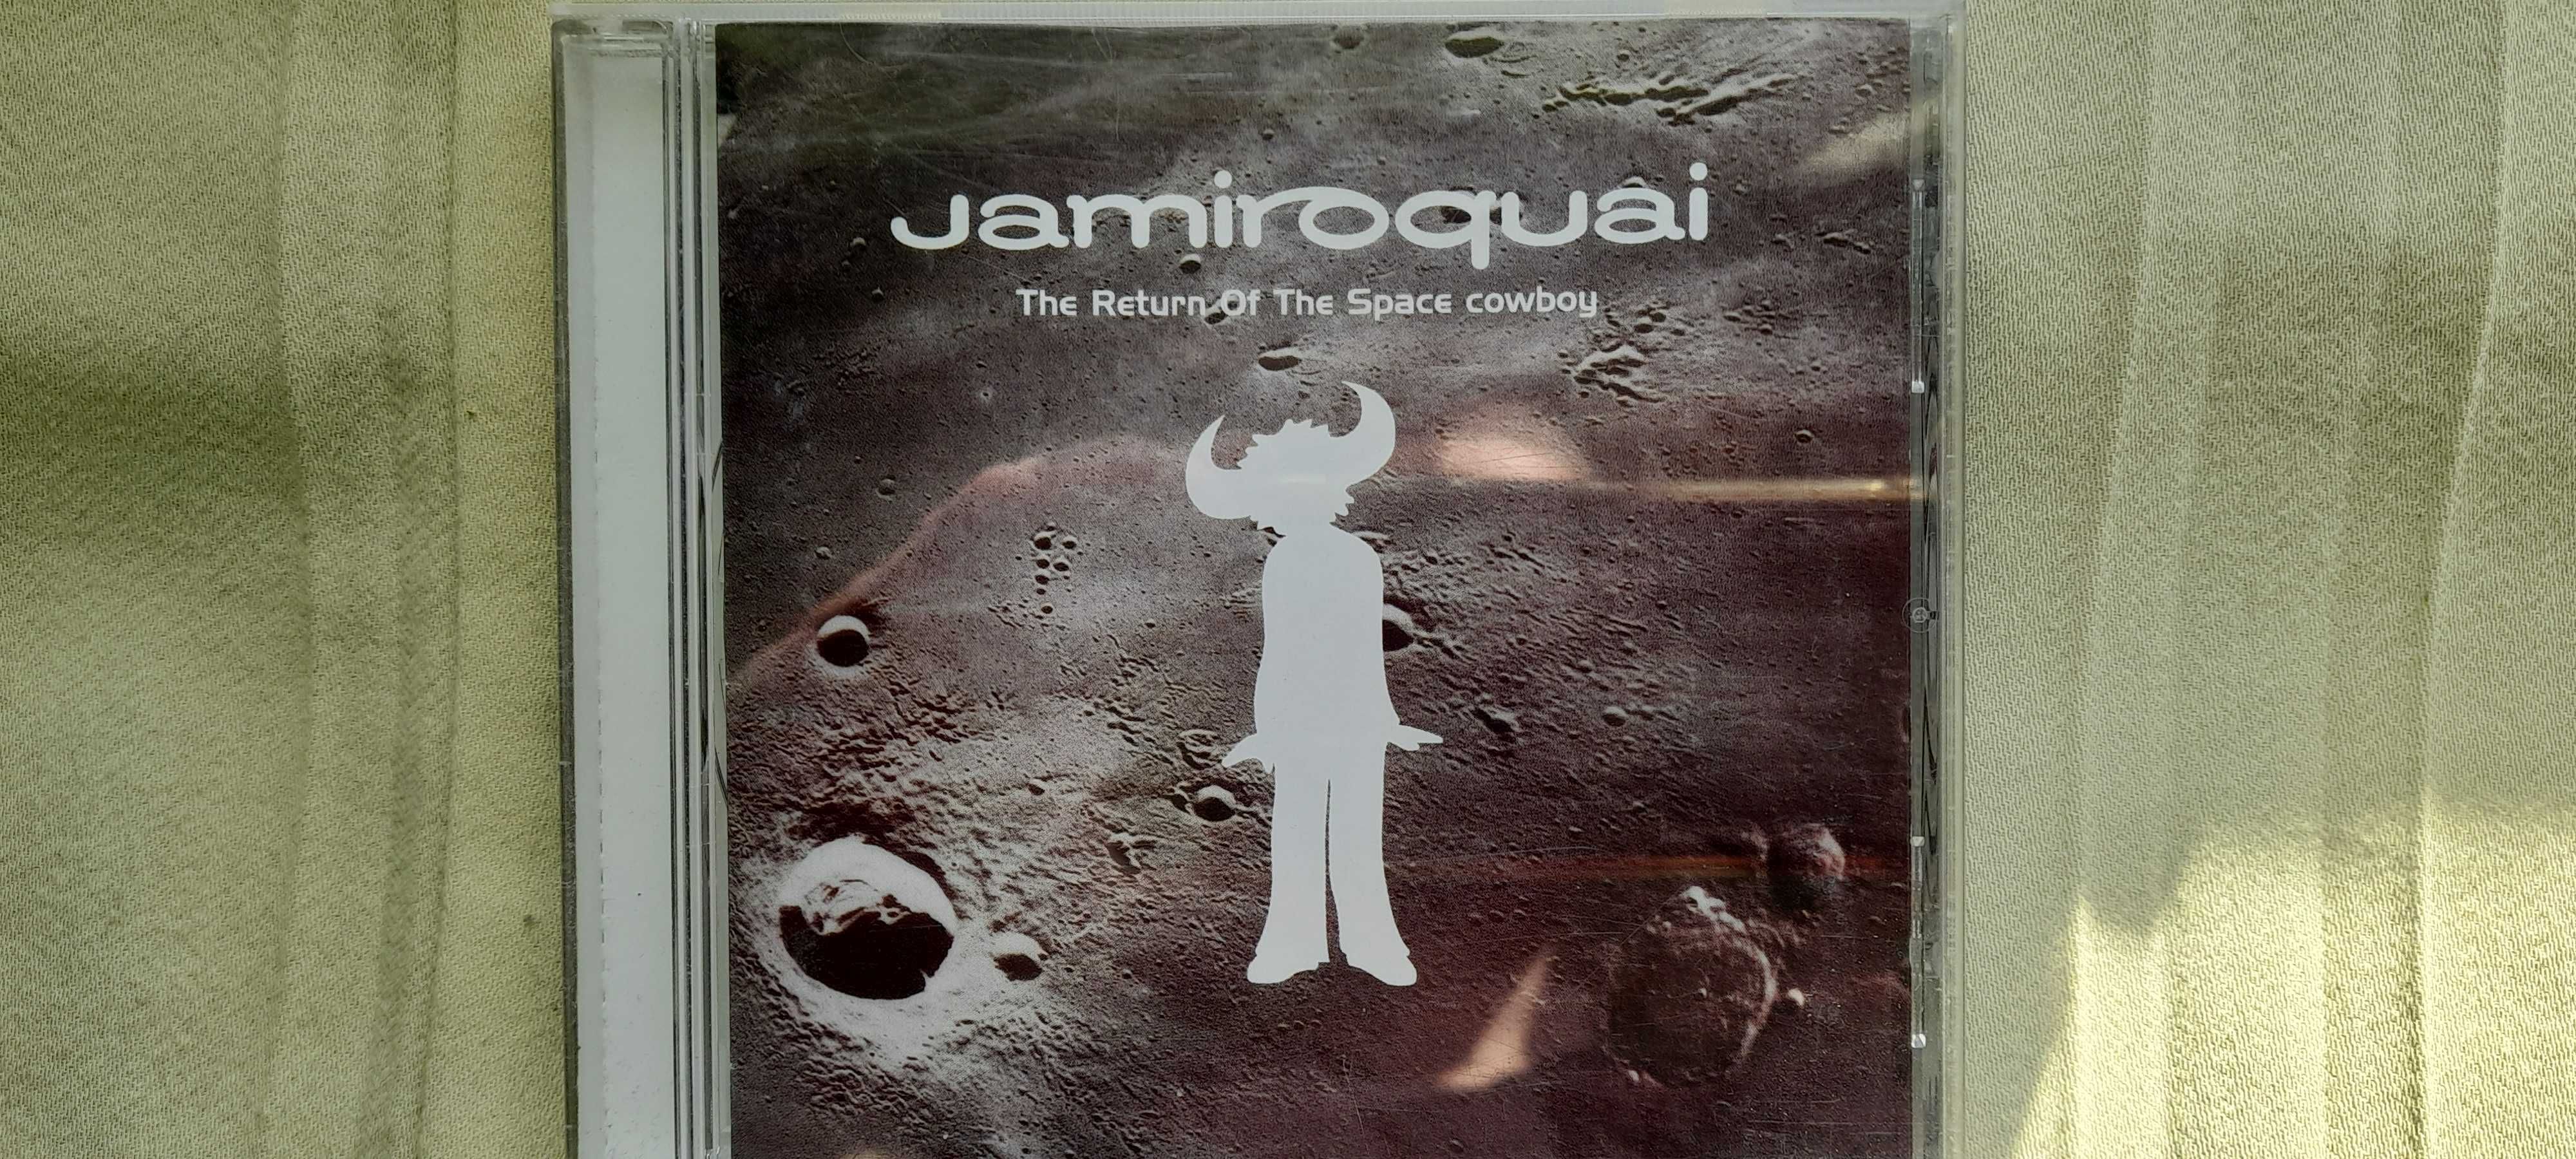 Jamiroquai "The Return Of The Space Cowboy"